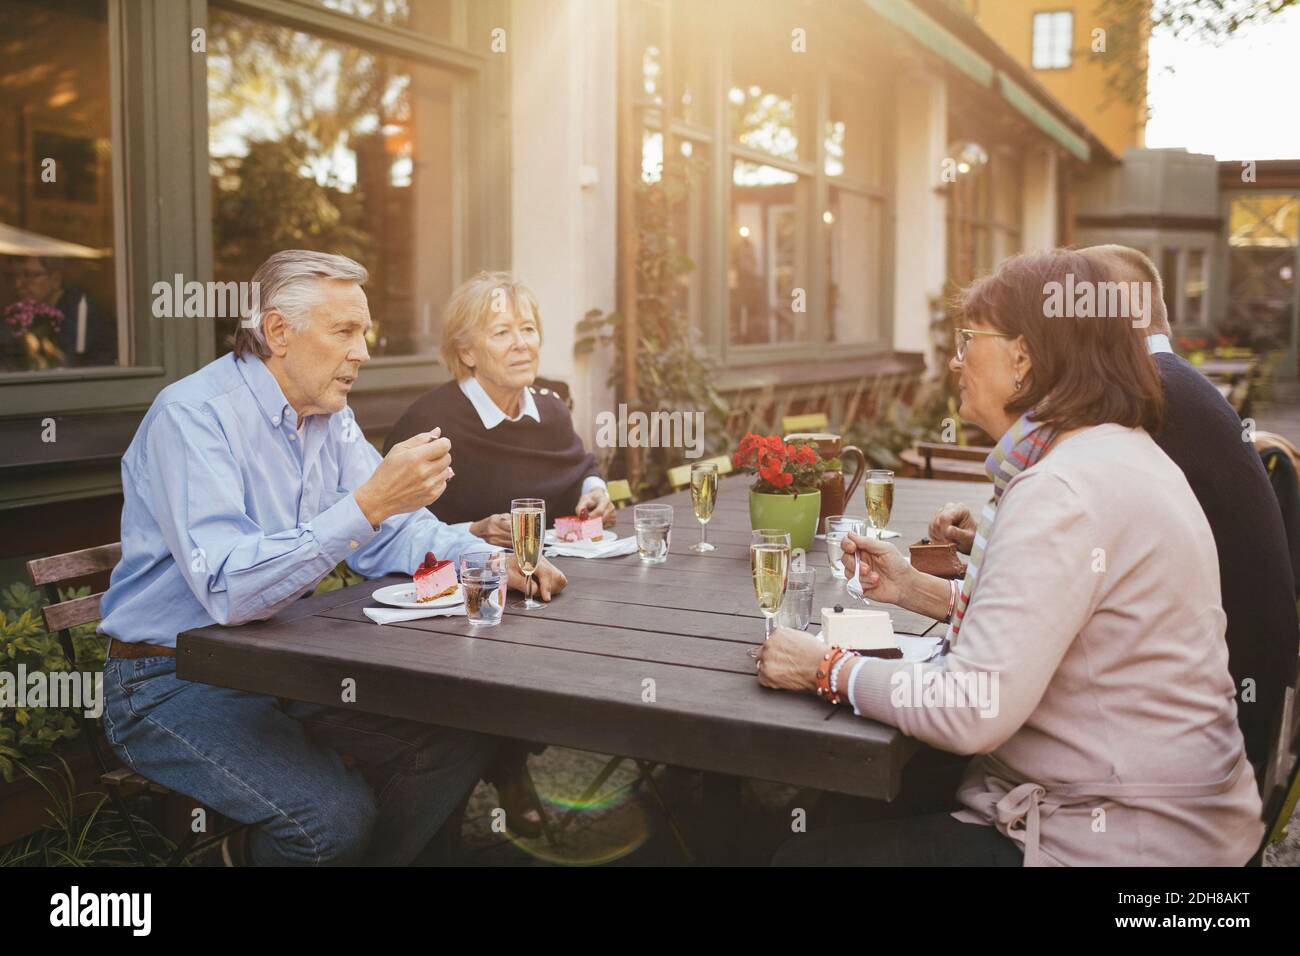 Two senior couples having desserts at outdoor restaurant Stock Photo